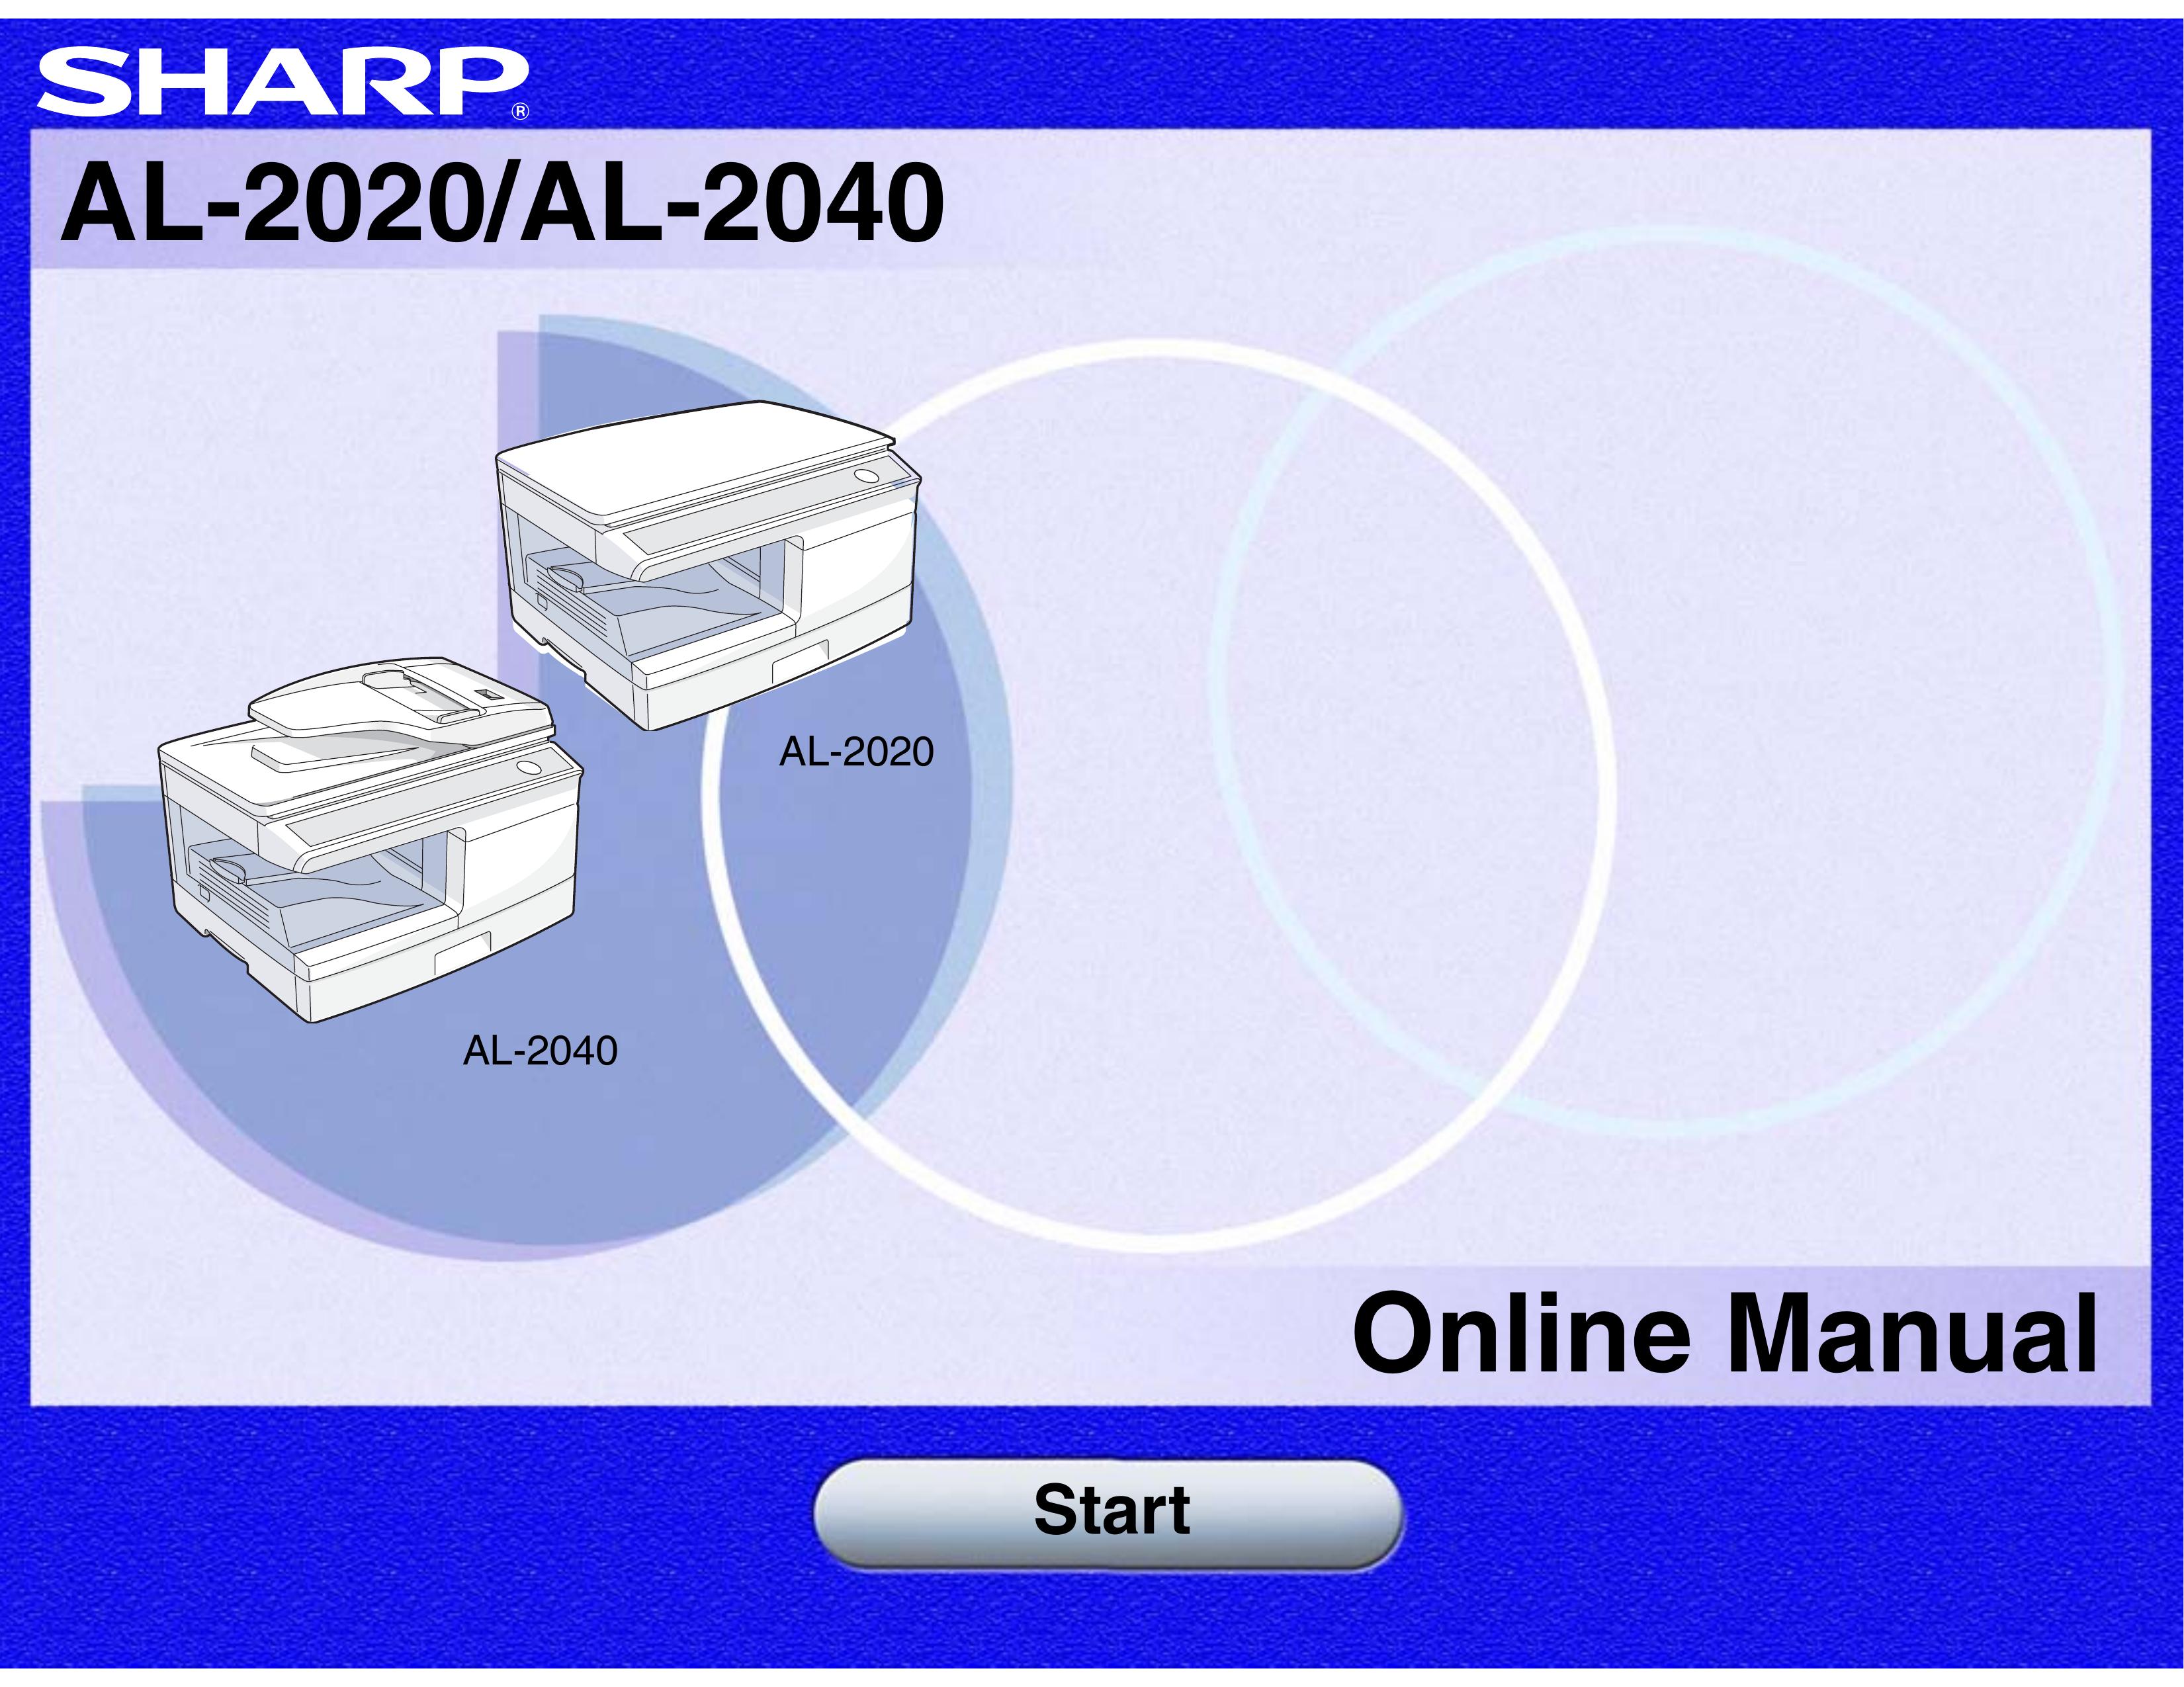 Sharp AL-2040 Photo Scanner User Manual